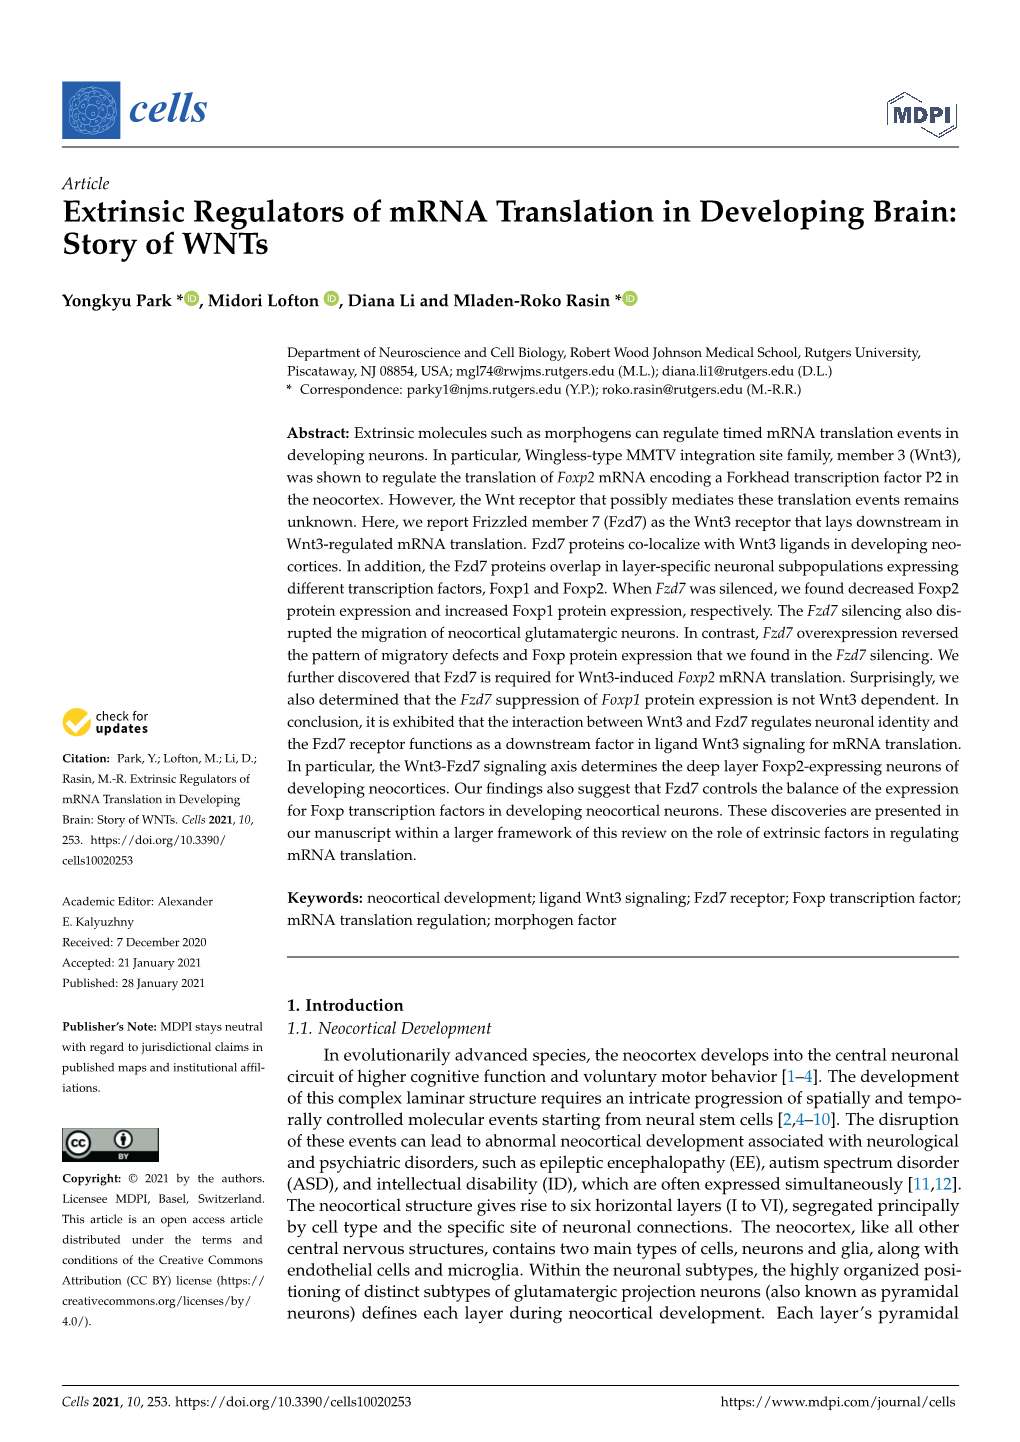 Extrinsic Regulators of Mrna Translation in Developing Brain: Story of Wnts